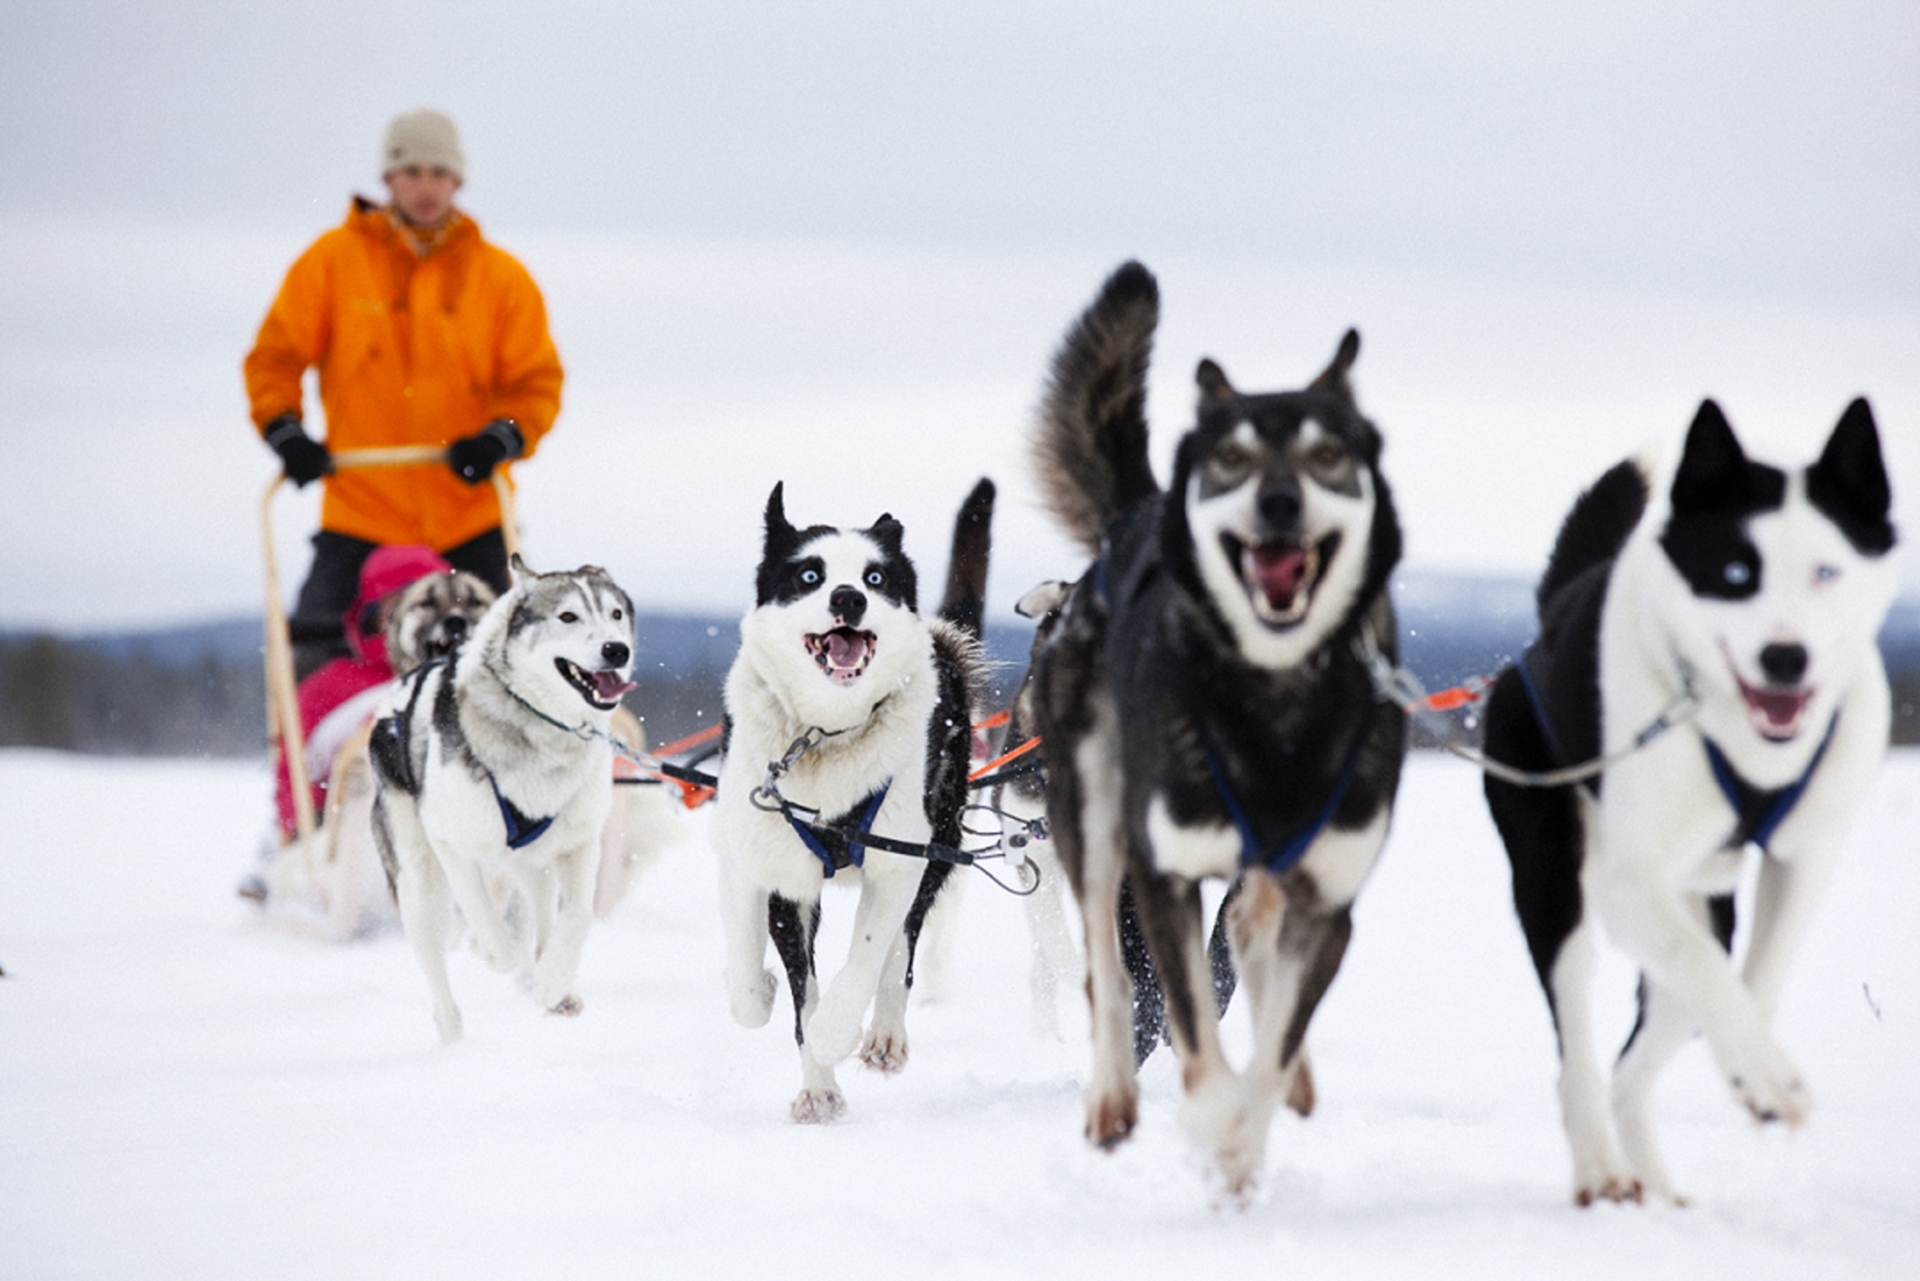 Husky sledding - Simply Finnish Lapland